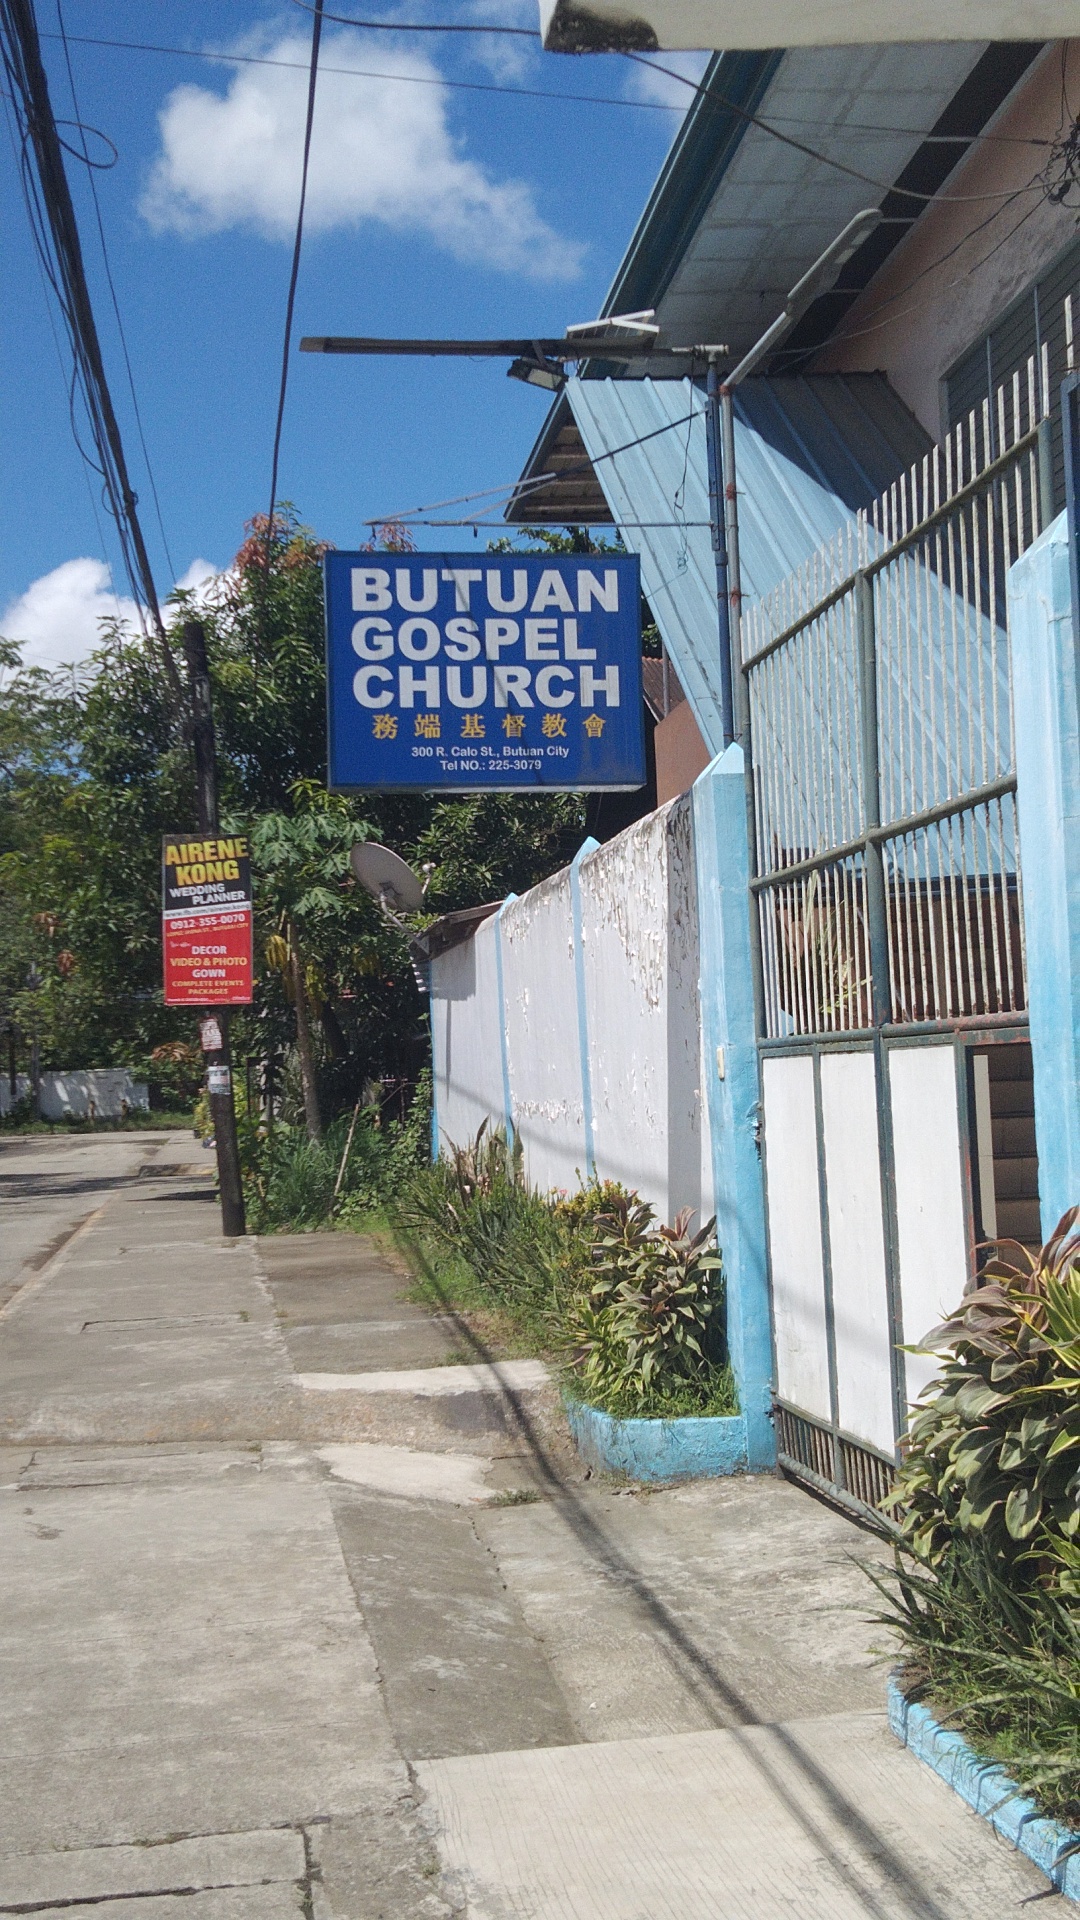 Butuan Gospel Church